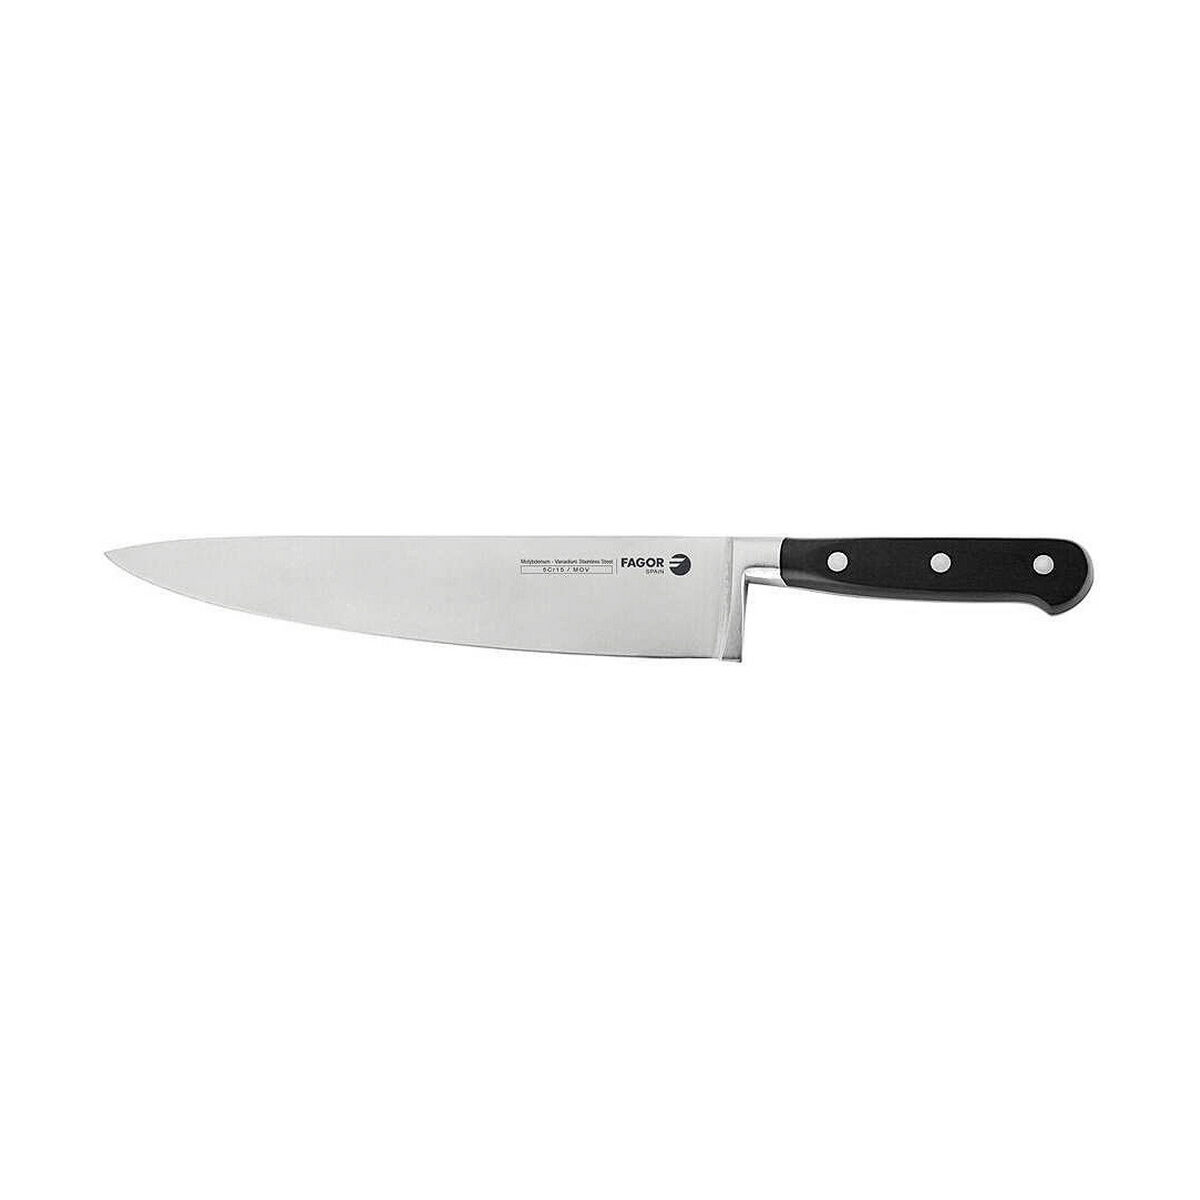 Couteau de cuisine FAGOR Couper Acier inoxydable (20 cm)